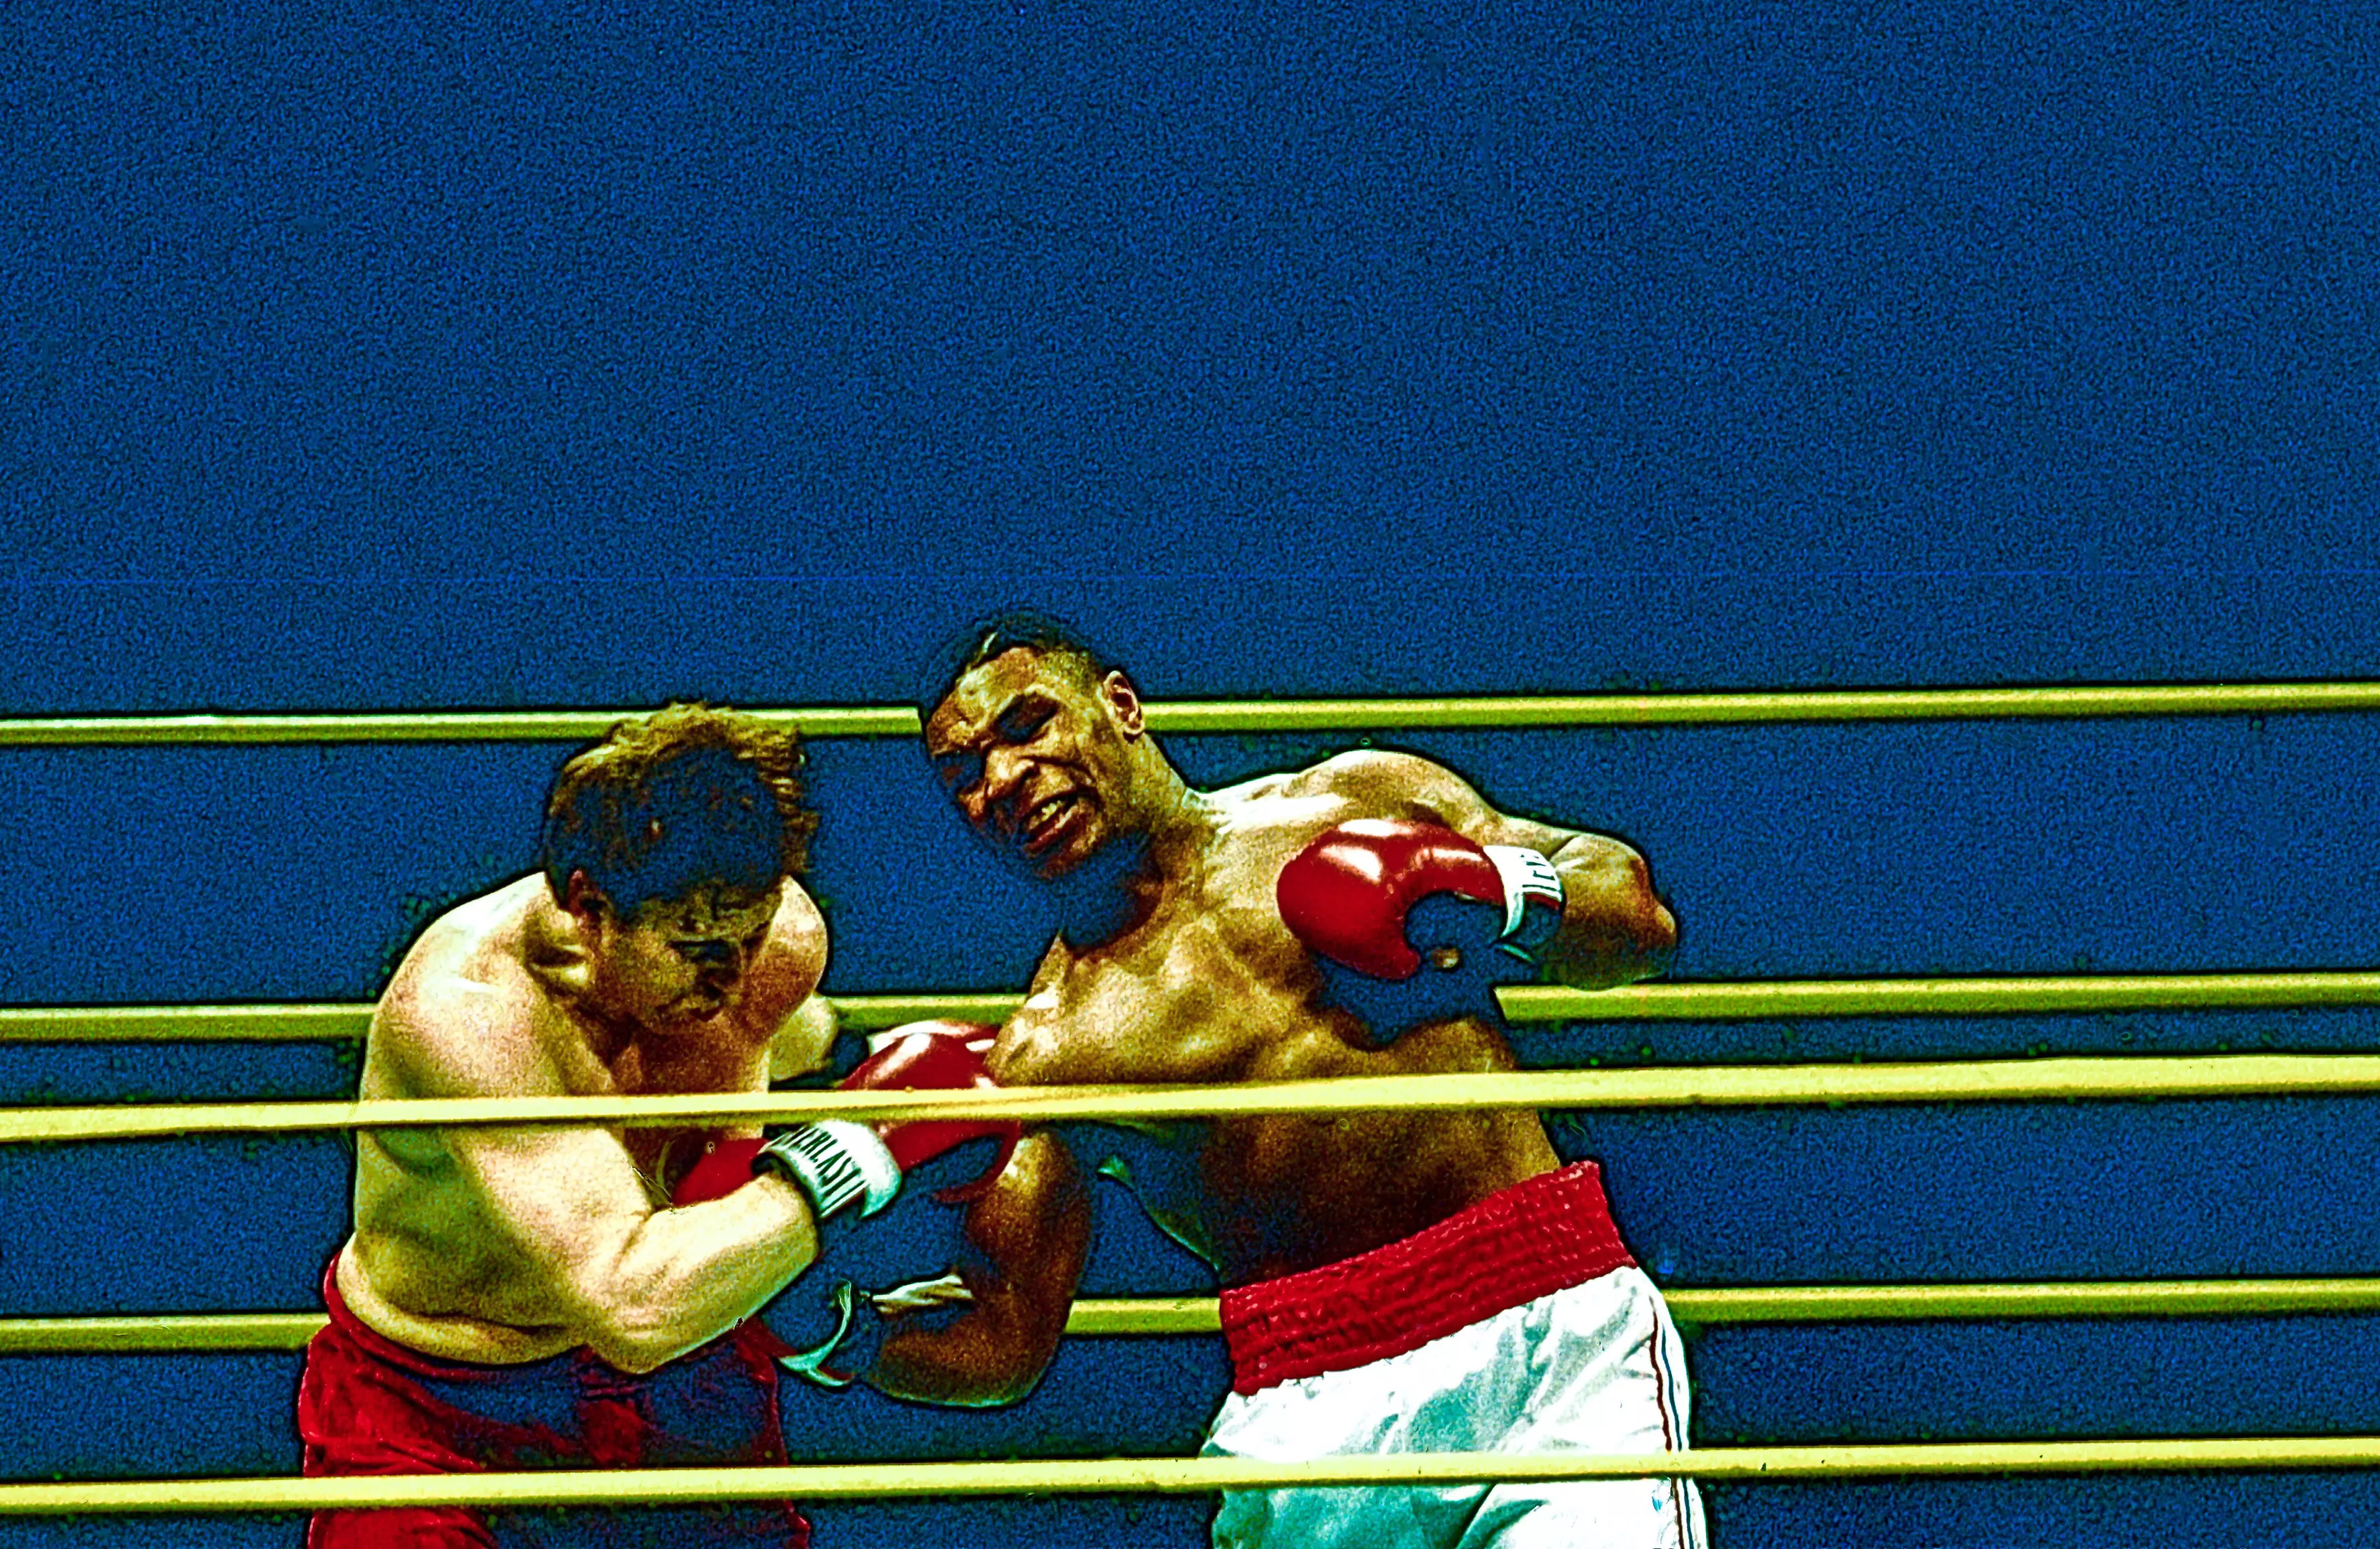 Mike Tyson vs Steve Zouski at Nassau Coliseum on March 10, 1986.